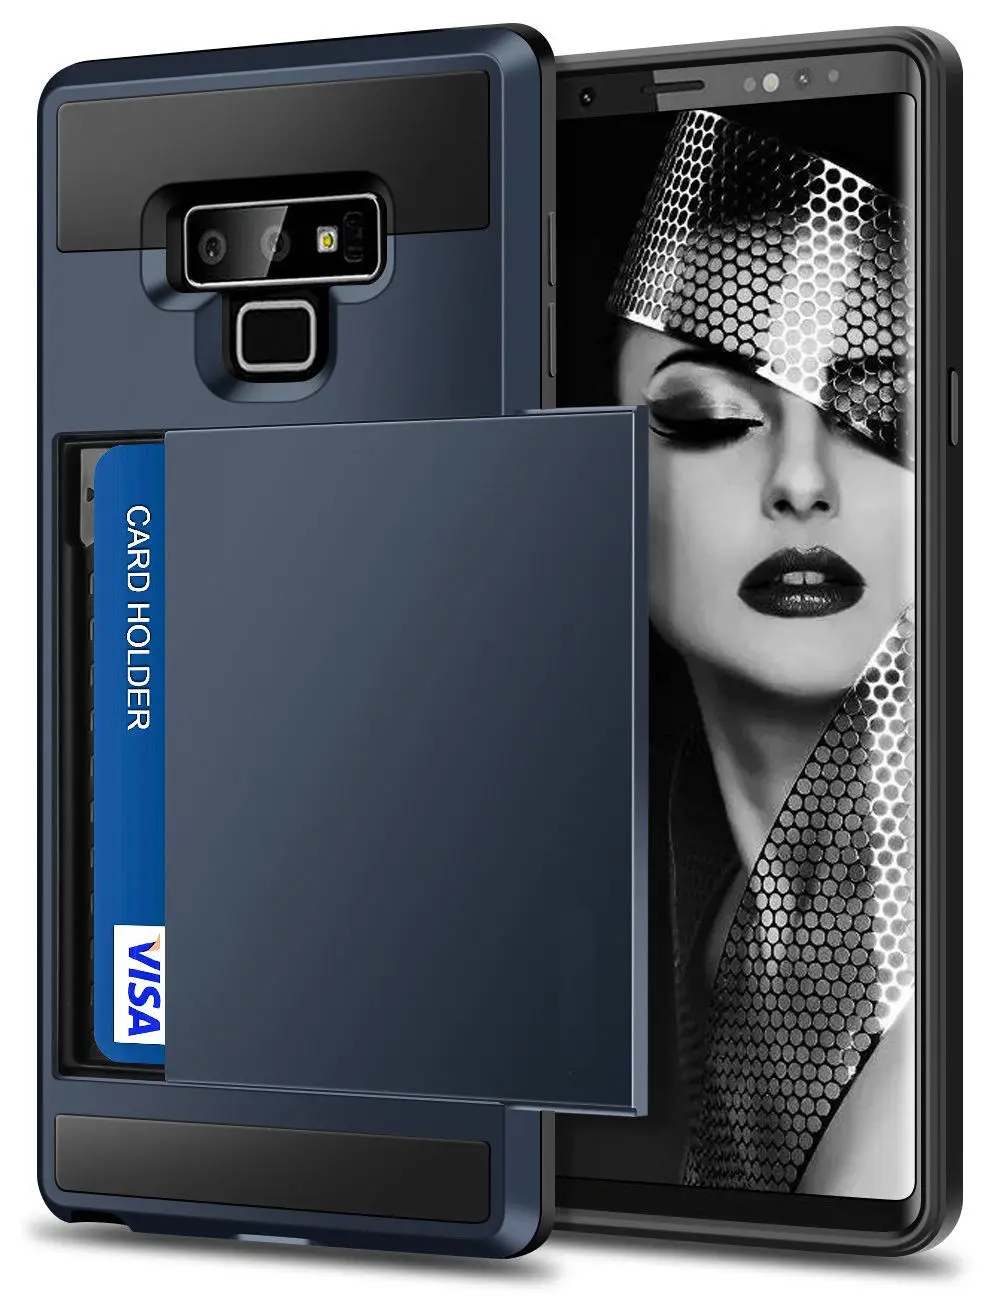 VRSDES слайд слот для карт чехол для телефона для samsung Galaxy S8 S9 плюс S7 S6 Edge Note 8 9 Гибридный чехол для samsung J2 J3 J4 J6 J7 - Цвет: Navy Blue